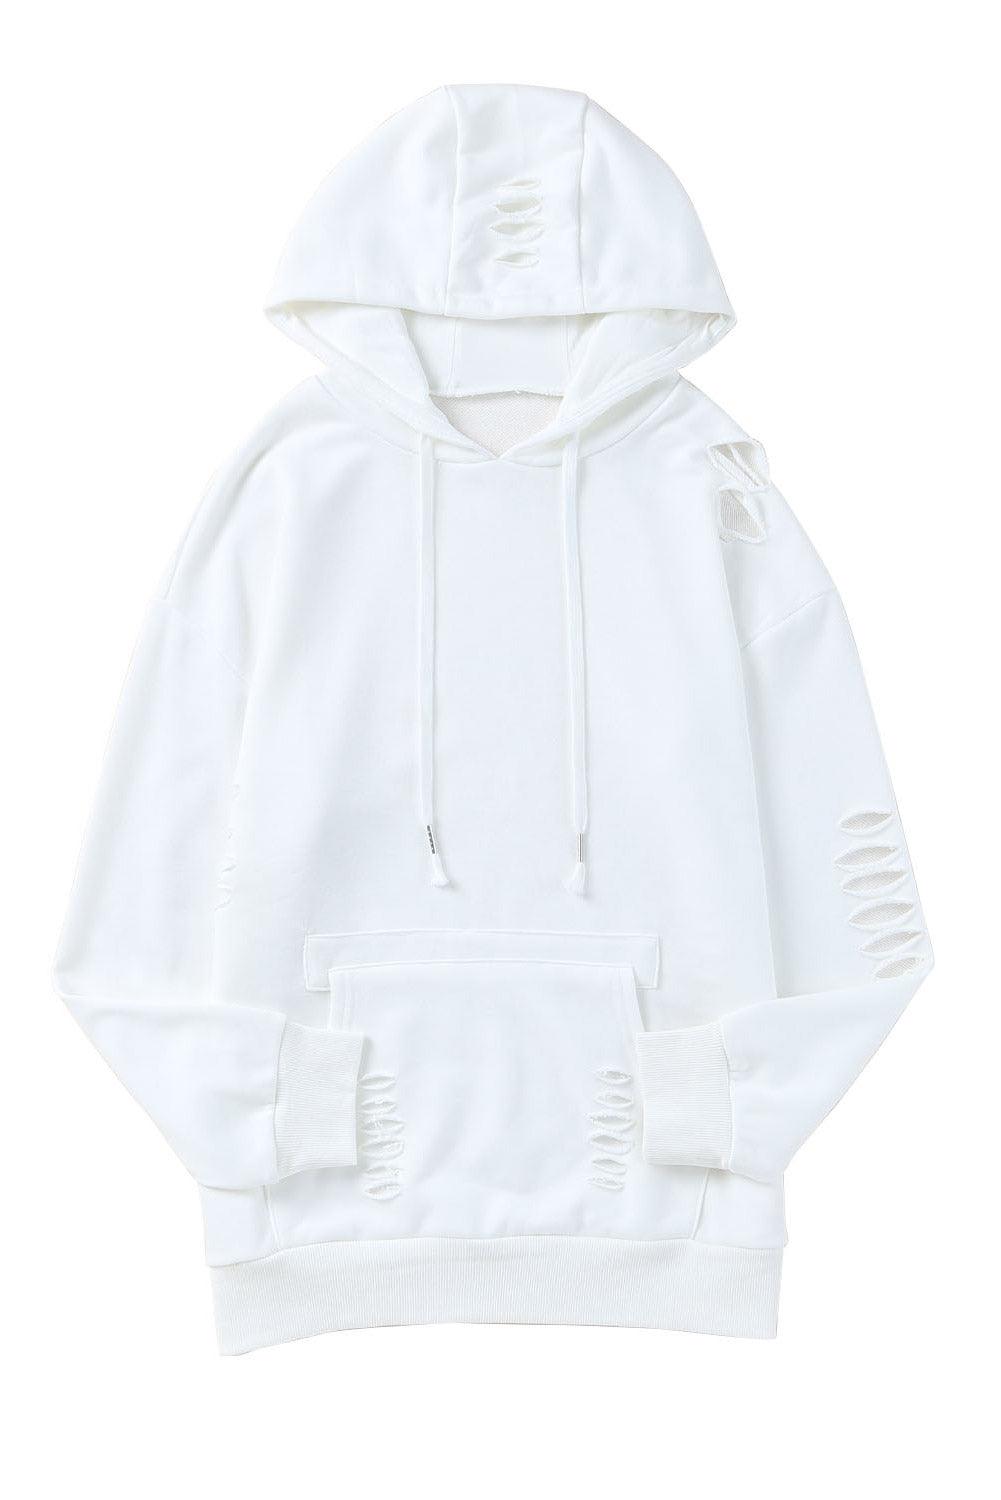 White Solid Ripped Hooded Sweatshirt with Kangaroo Pocket - L & M Kee, LLC